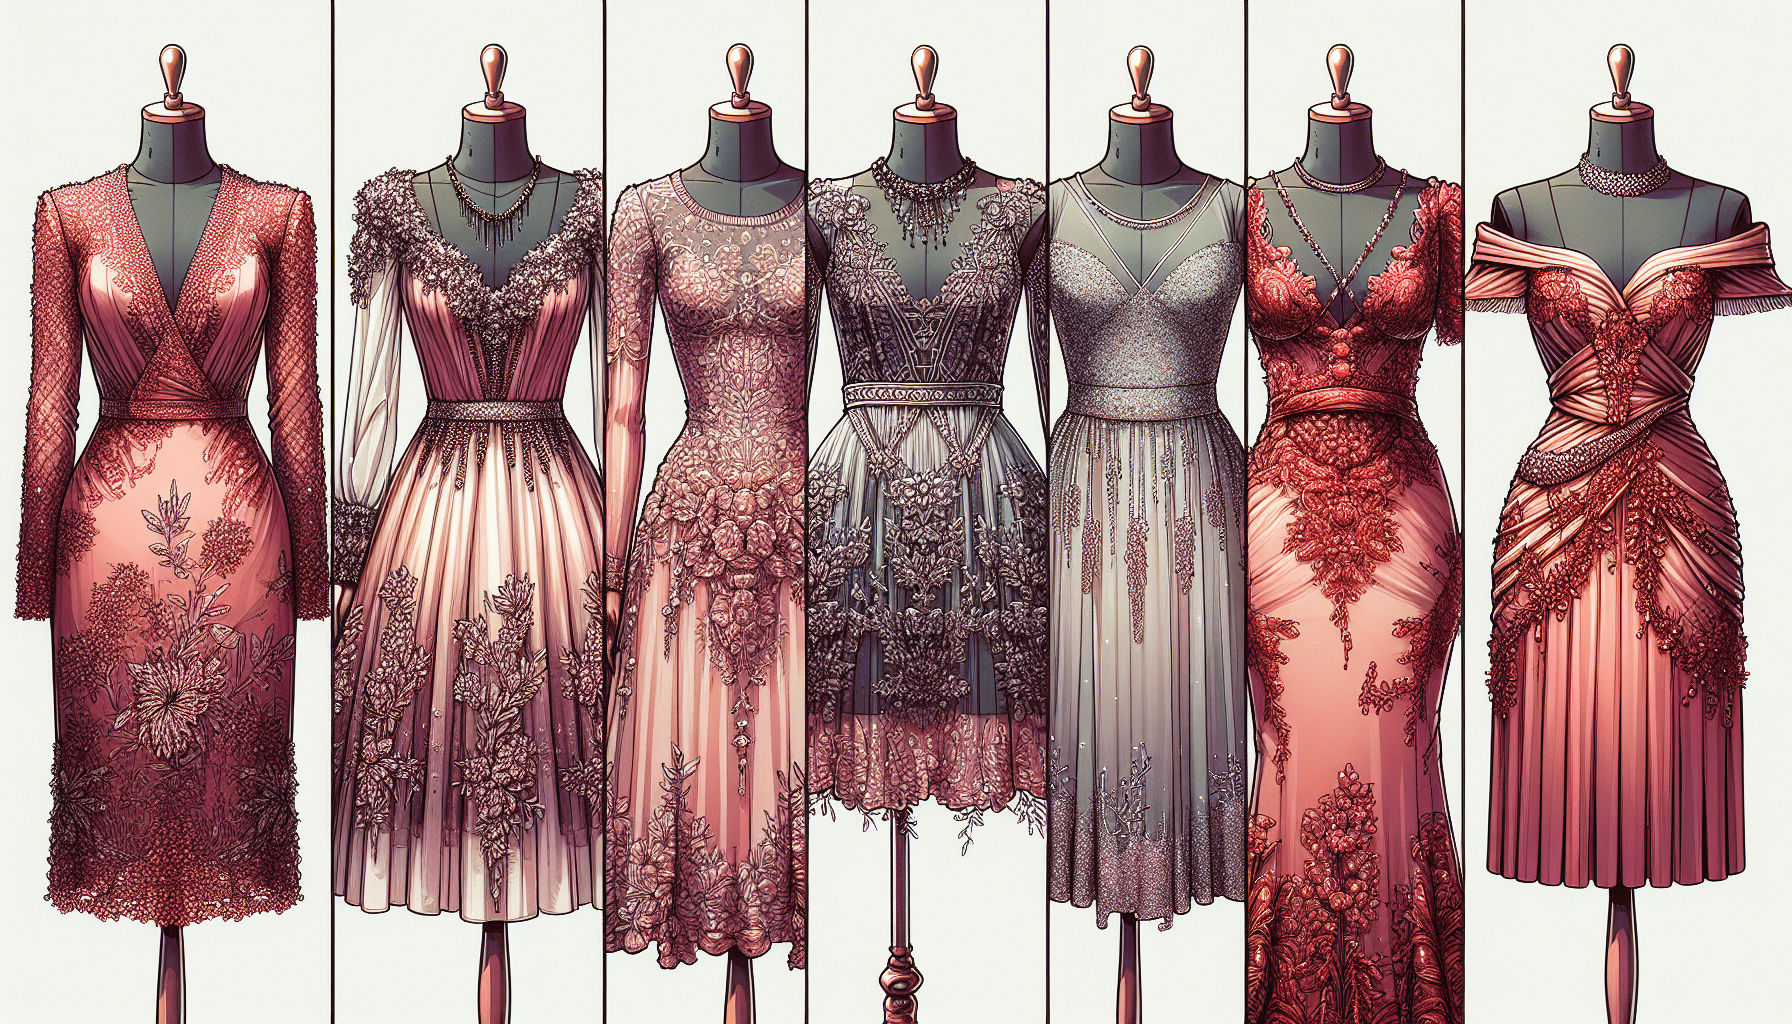 Elevate your style with 6 elegant revenge dresses